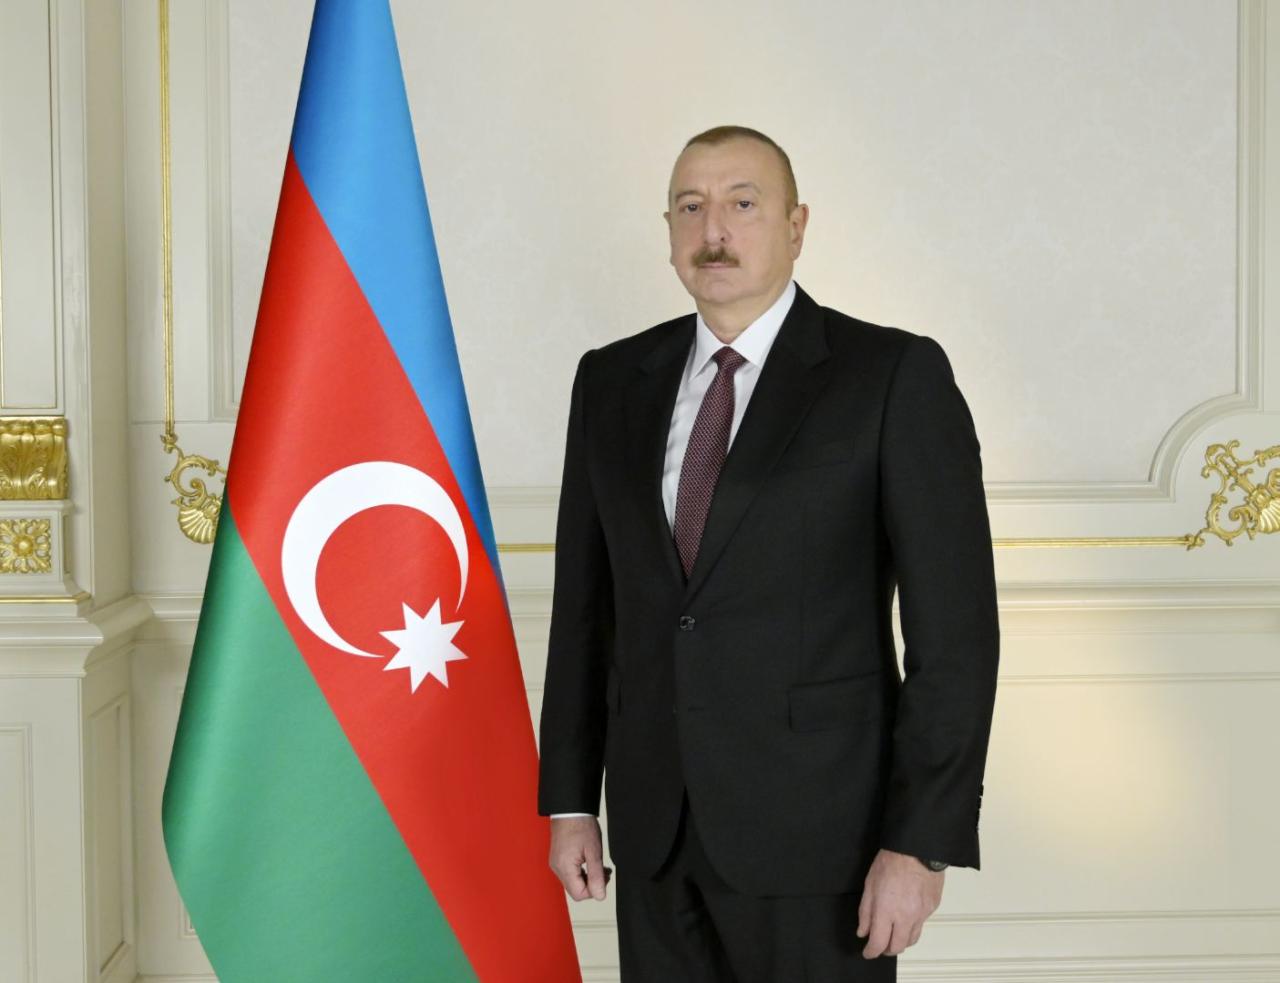 President congratulates Azerbaijani people on Novruz holiday [UPDATE]